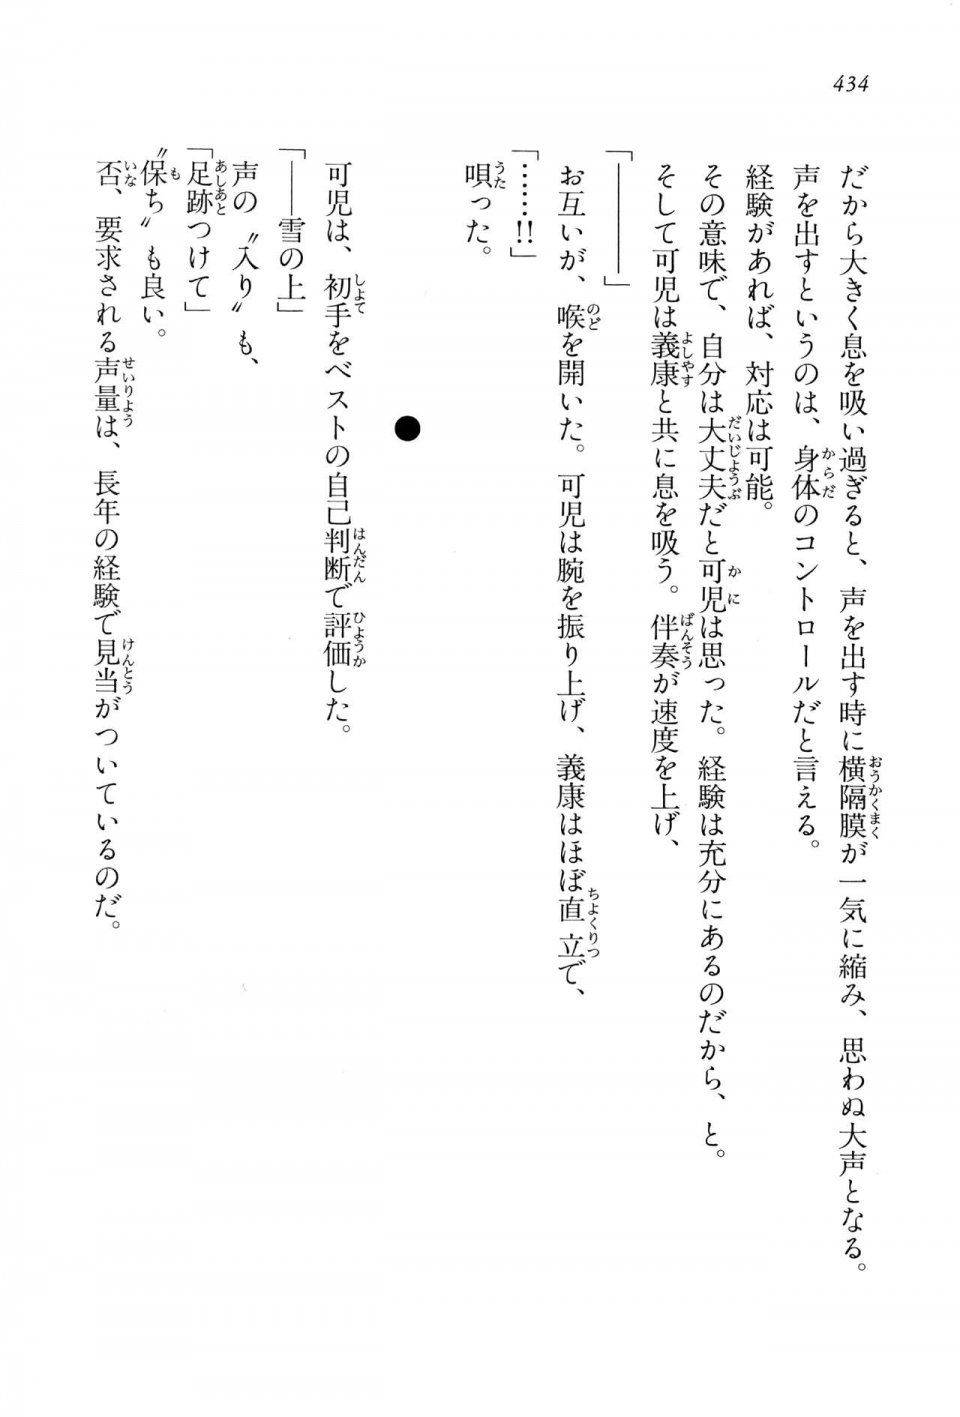 Kyoukai Senjou no Horizon LN Vol 15(6C) Part 1 - Photo #434